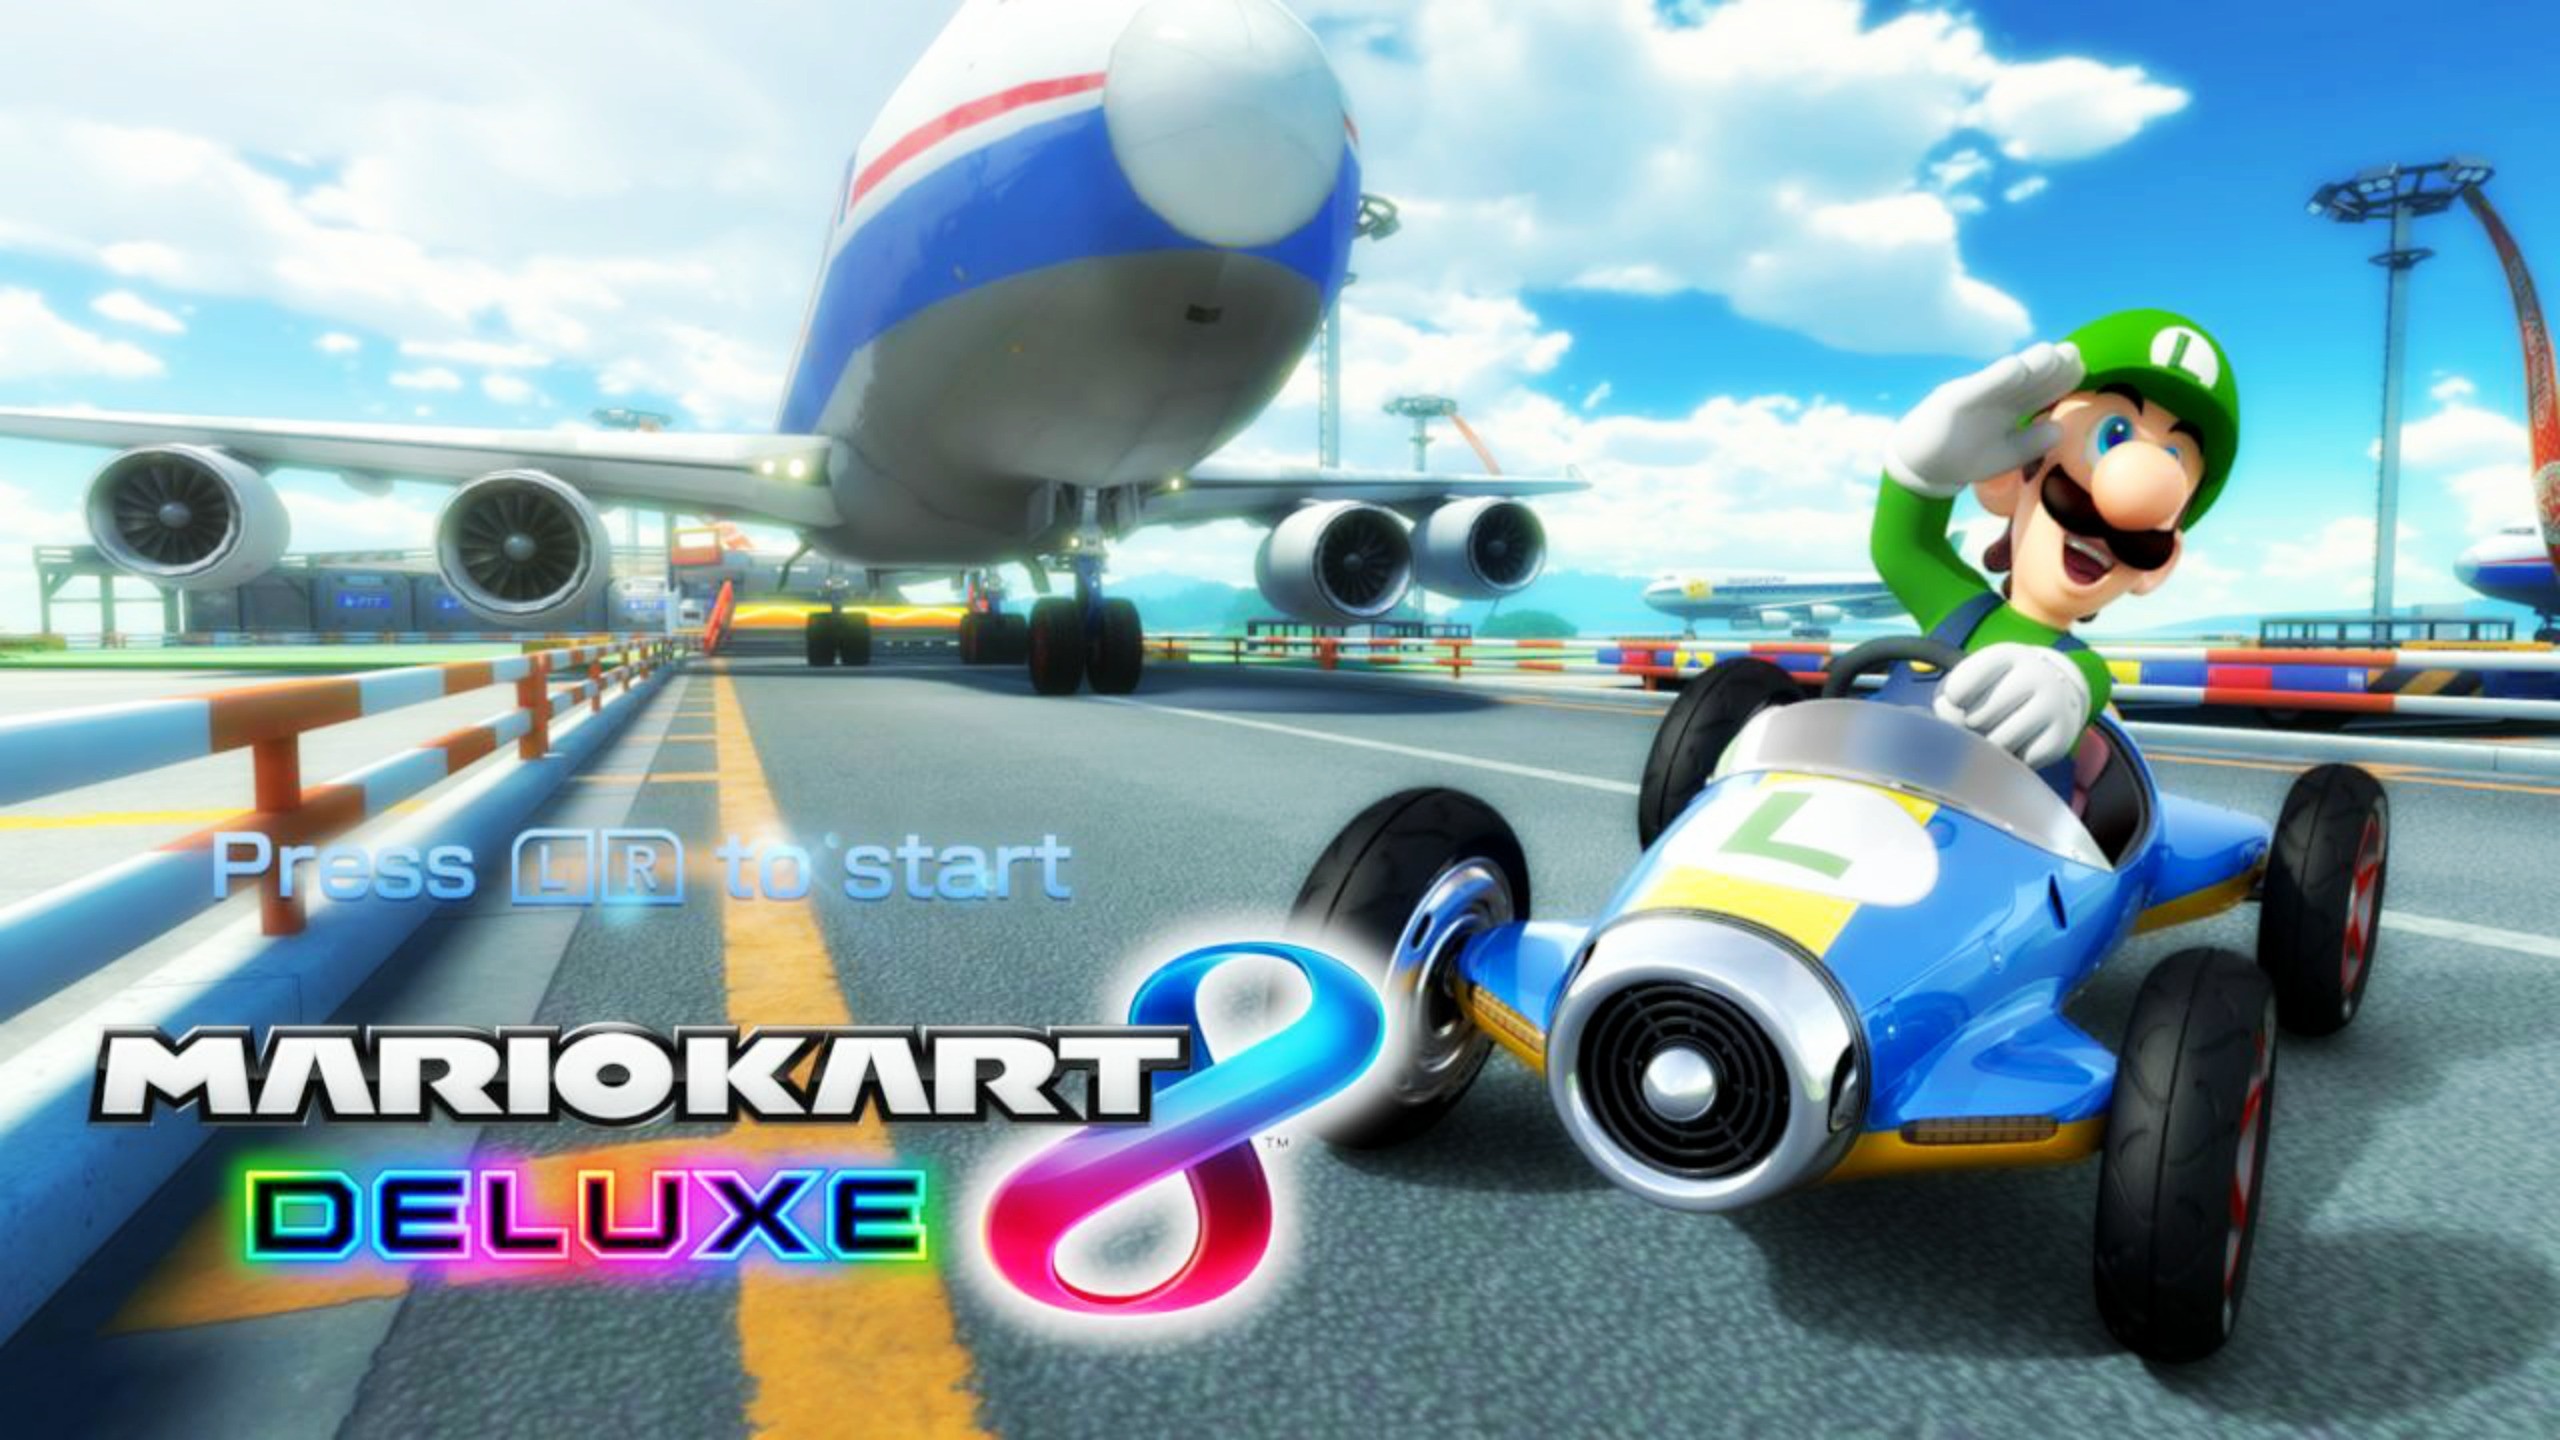 2560x1440 ... ObsessedGamerGal86 Mario Kart 8 Deluxe - Cheeful Luigi! by  ObsessedGamerGal86